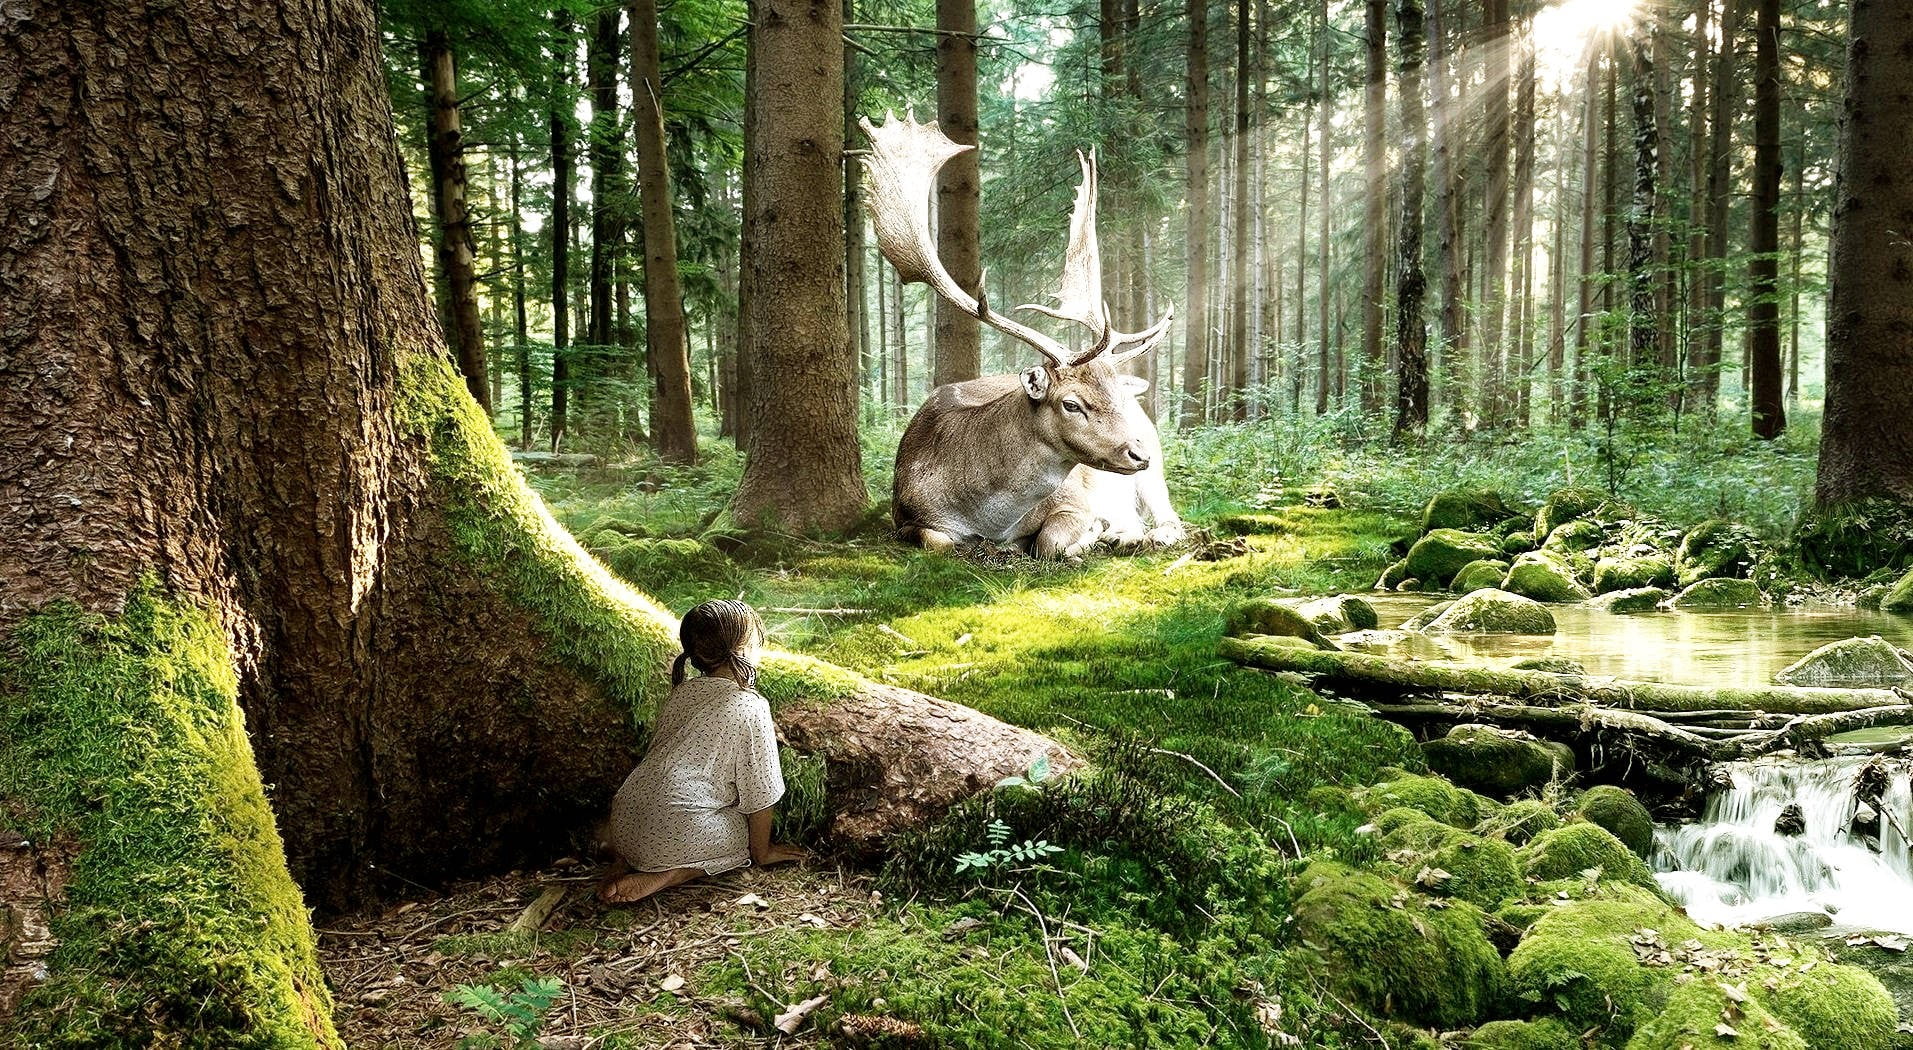 child sitting beside tree facing moose lying on grass, nature, children, animals, fictional